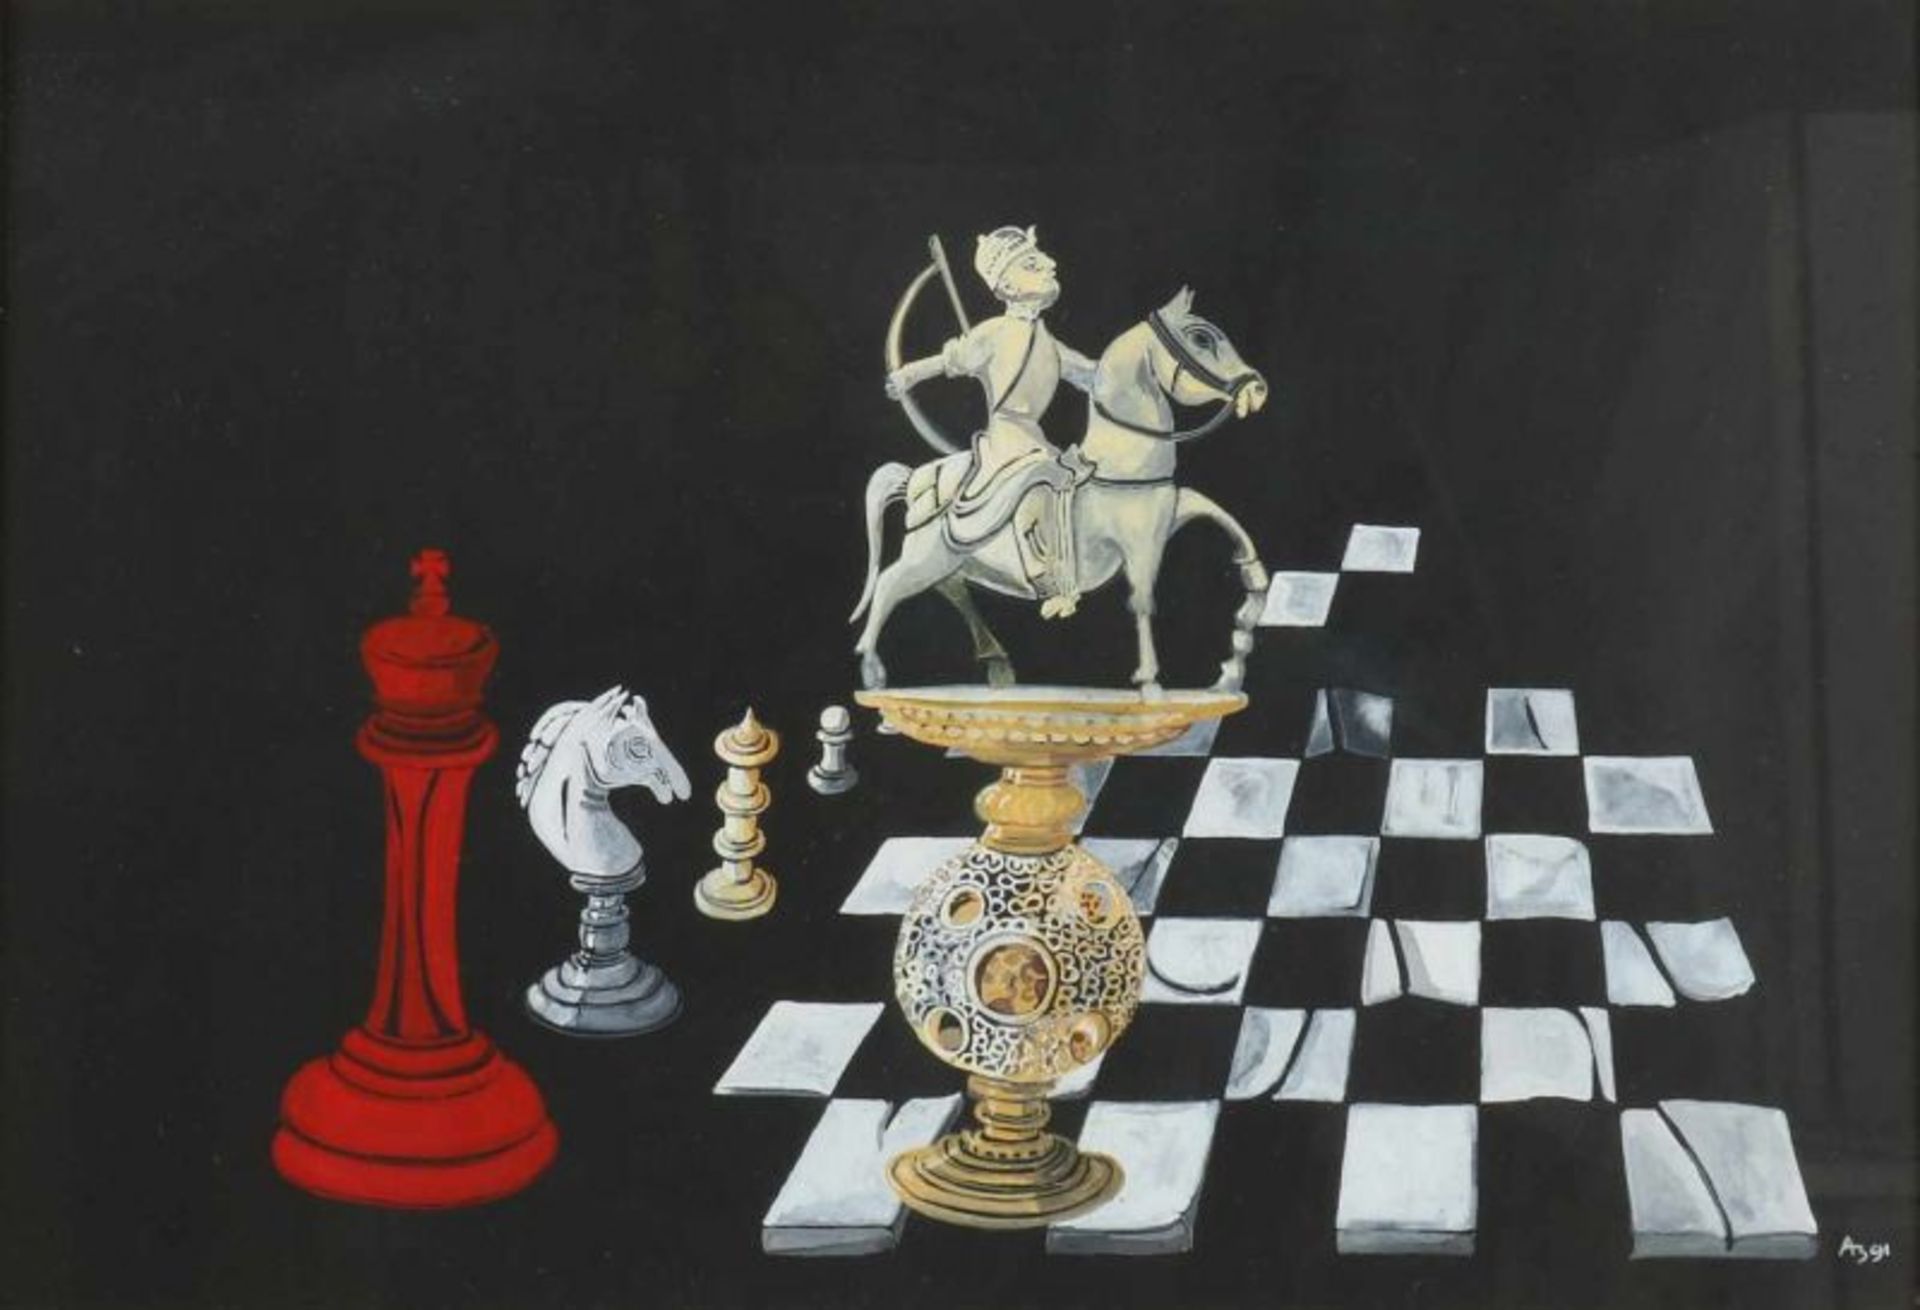 Aad van den Bosch. 1937 -. Chess Presentation. Gouache on paper. Size: 30 x H, B 45 cm. In good